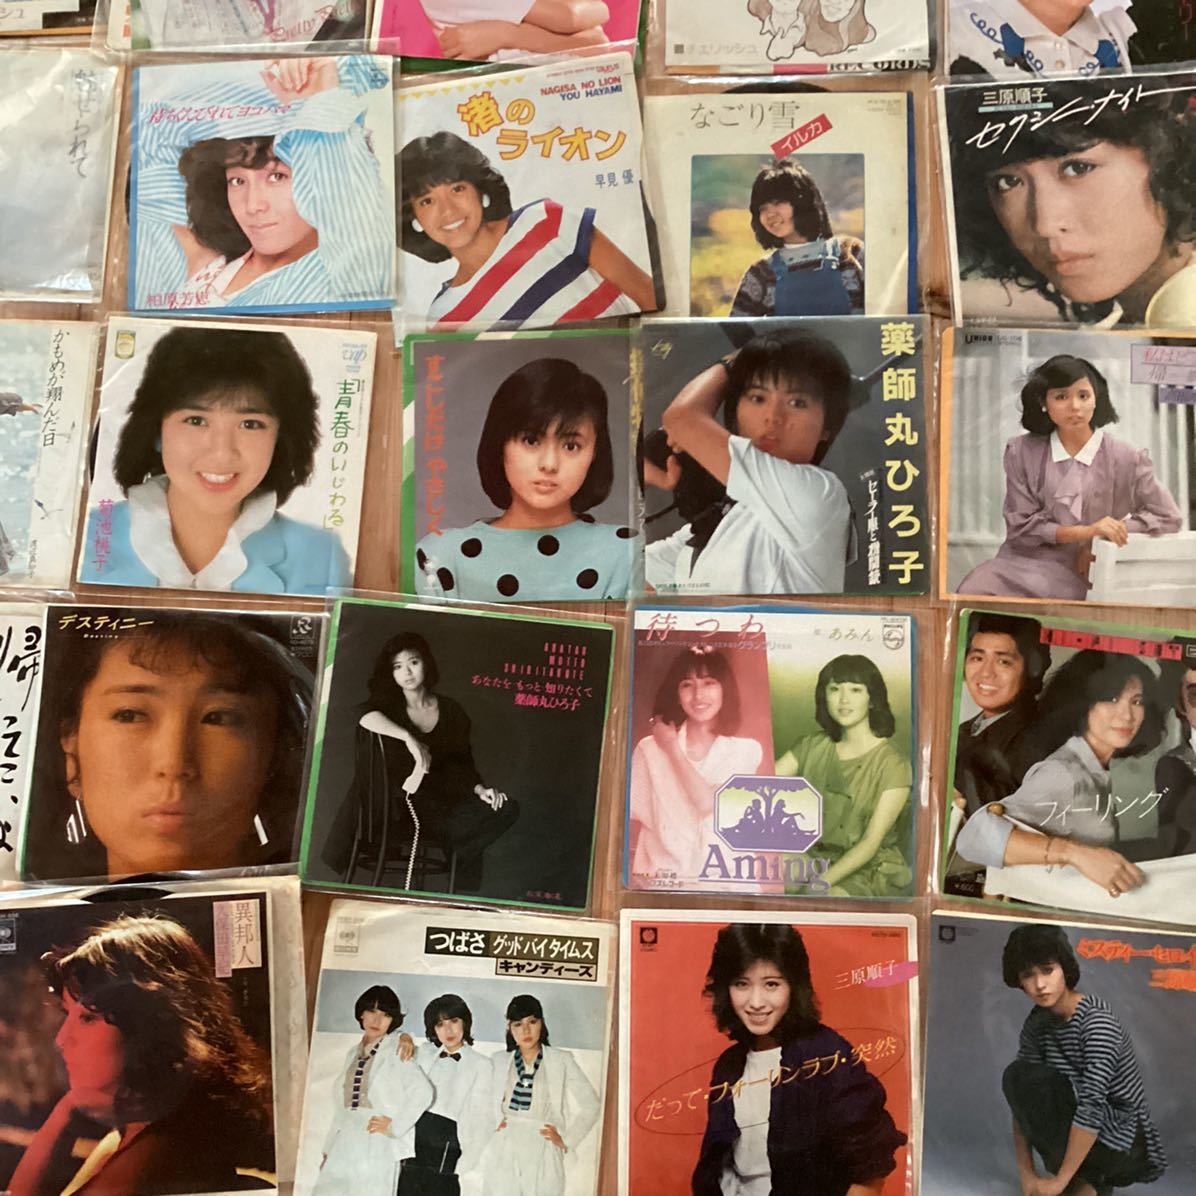  woman only 1 box [ approximately 250 sheets ]70-80 period Showa era song Showa era pops City pop idol 7 -inch EP record large amount set Iwasaki Hiromi RD0731-12